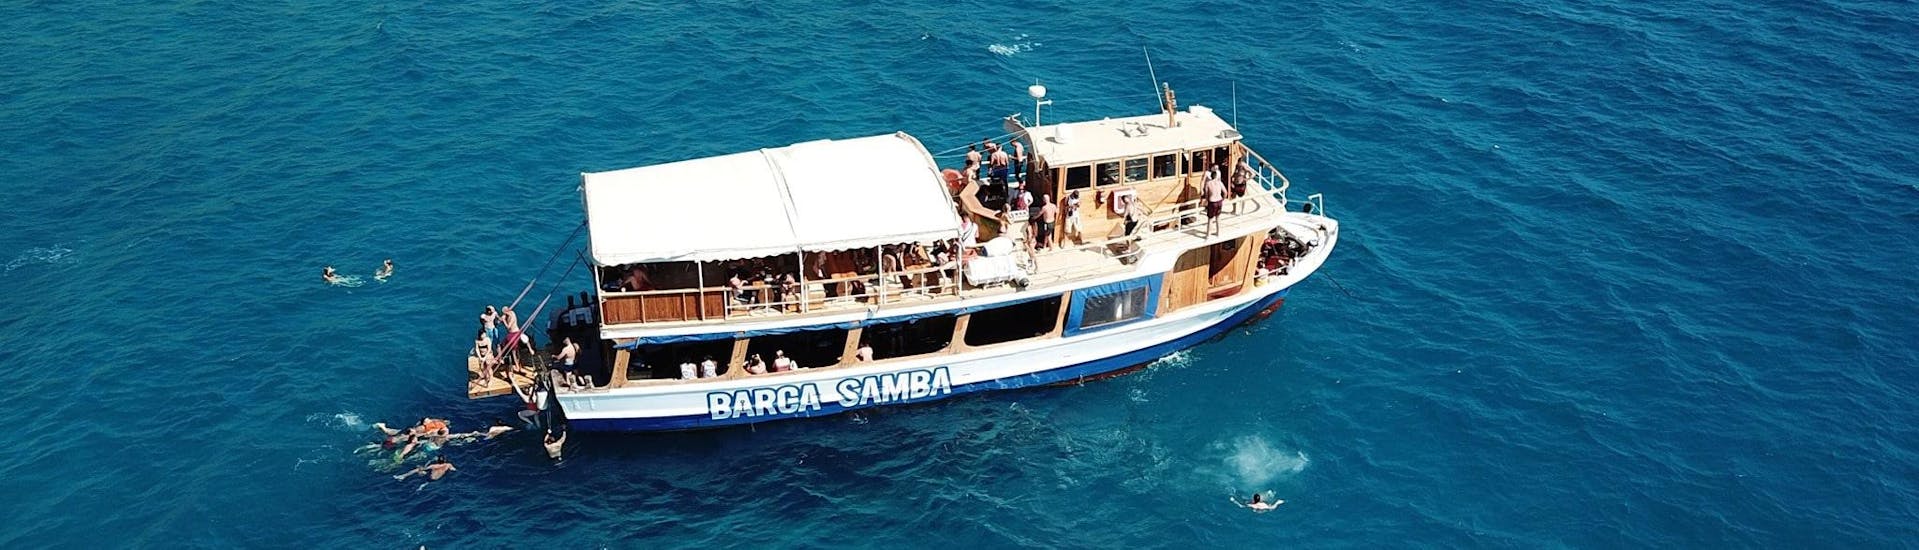 A boat trip goes around Palma with Barca Samba.